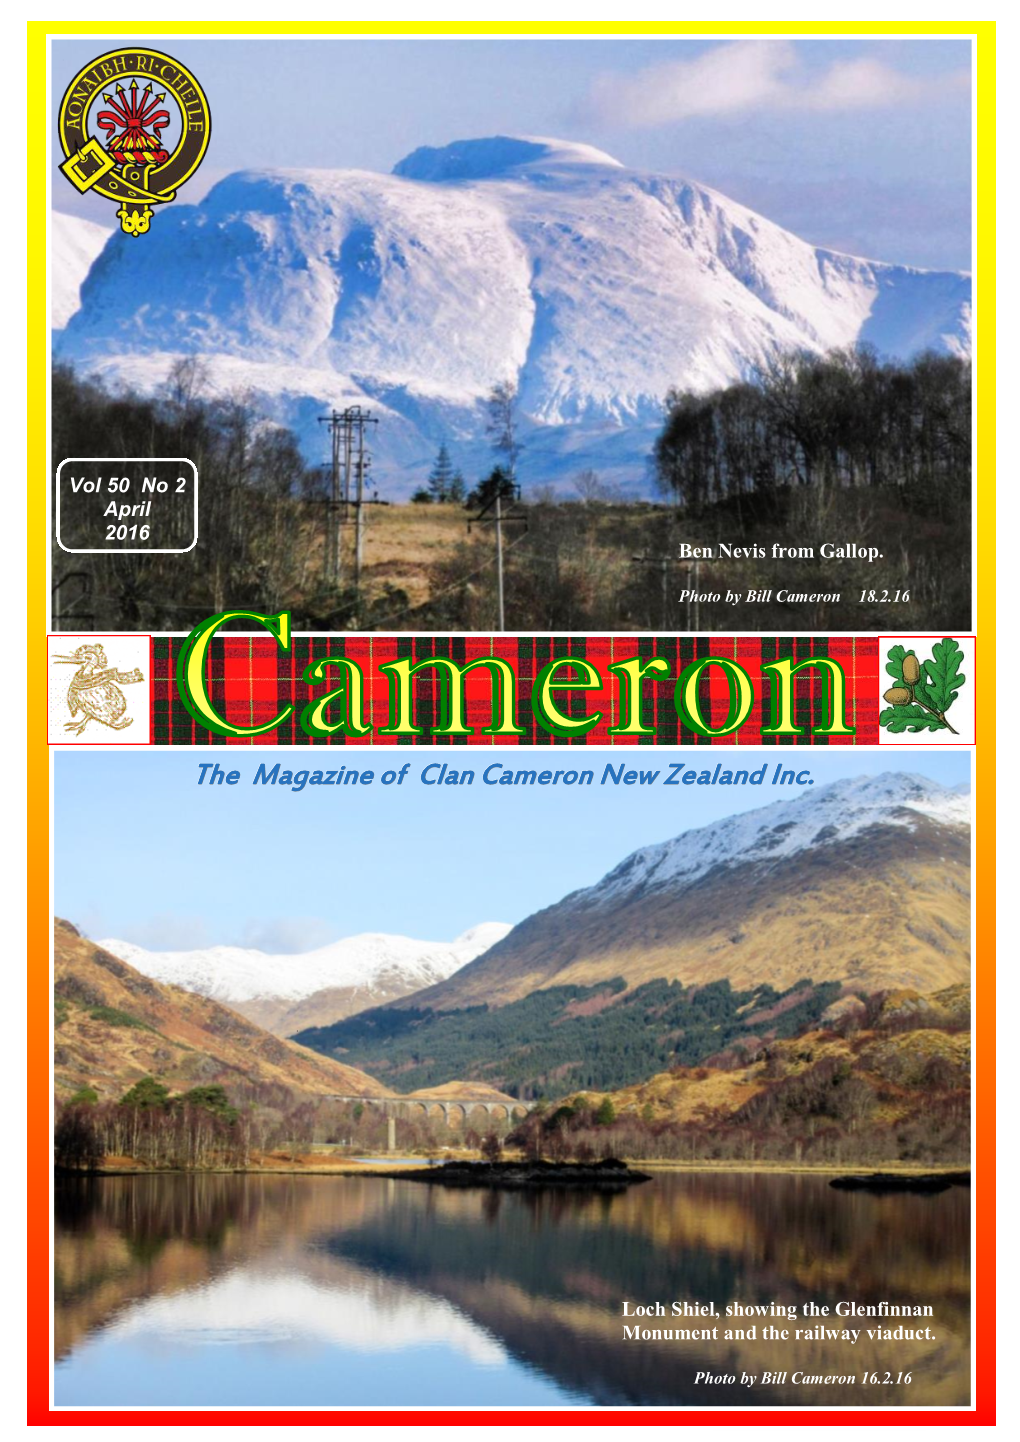 The Magazine of Clan Cameron New Zealand Inc